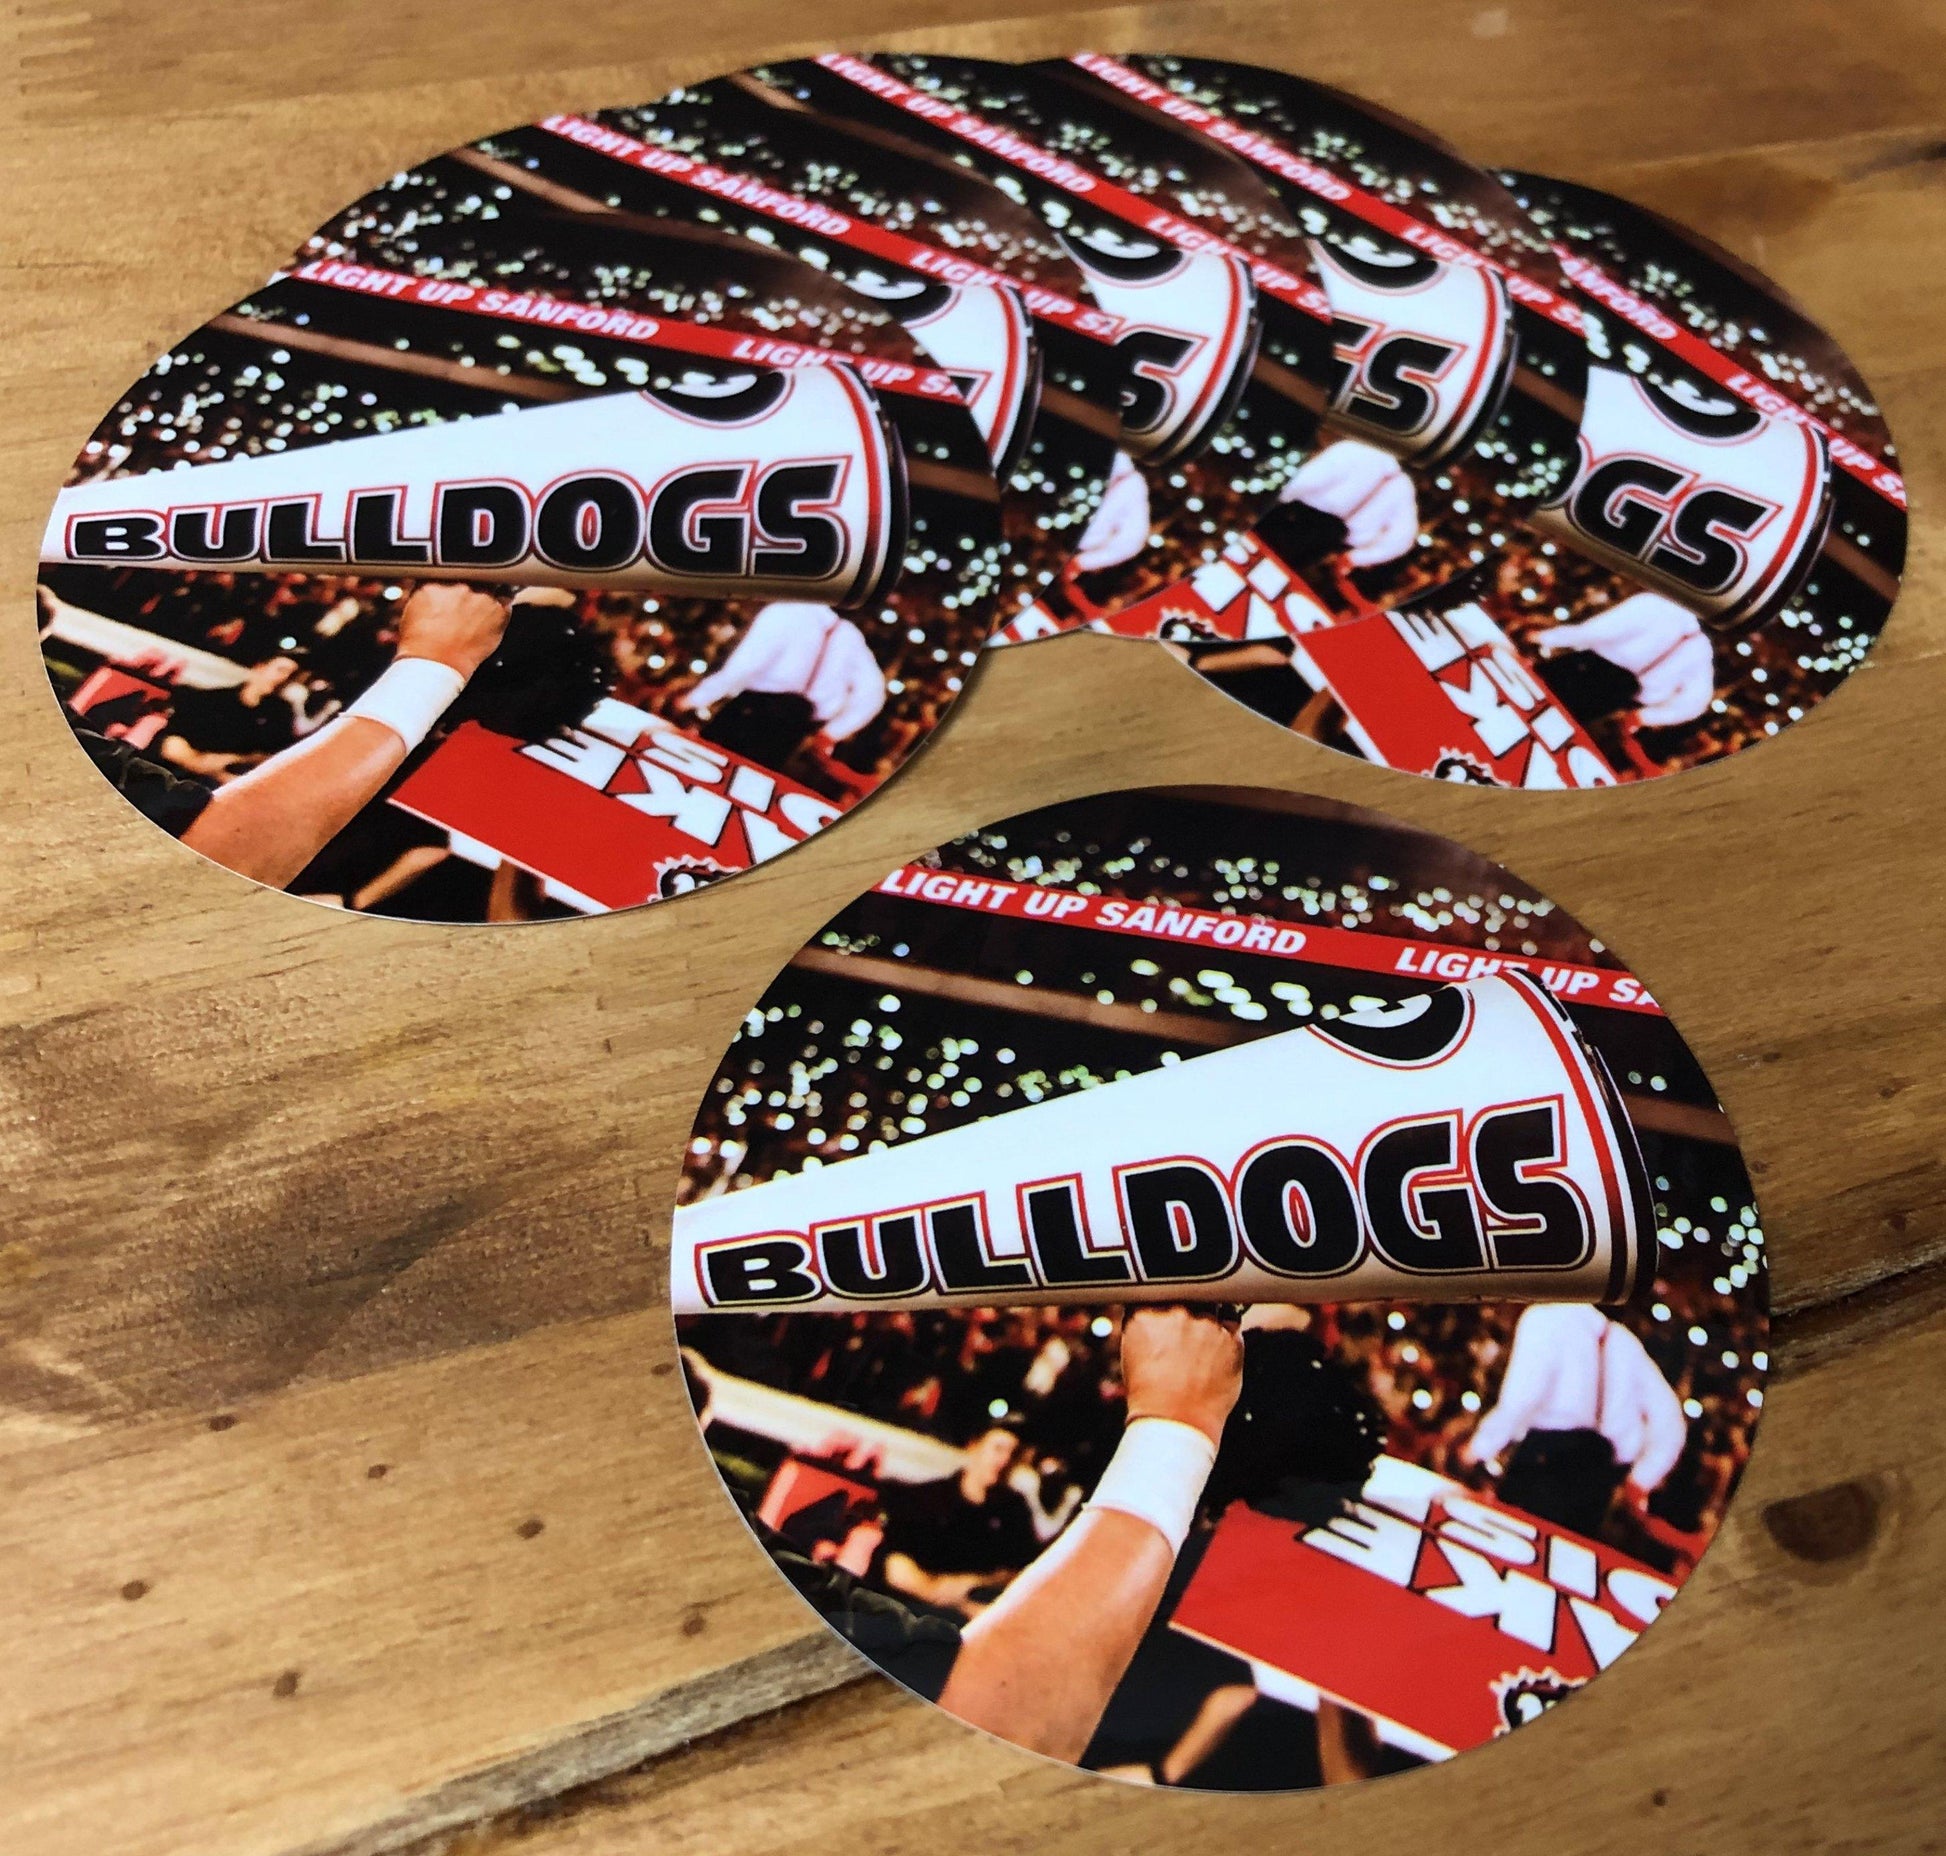 UGA Georgia Bulldogs Sticker 6-Pack - Light Up Sanford - 2.75" Circle Vinyl Photo Decal - Gift Wrap - WRIGHT PHOTO